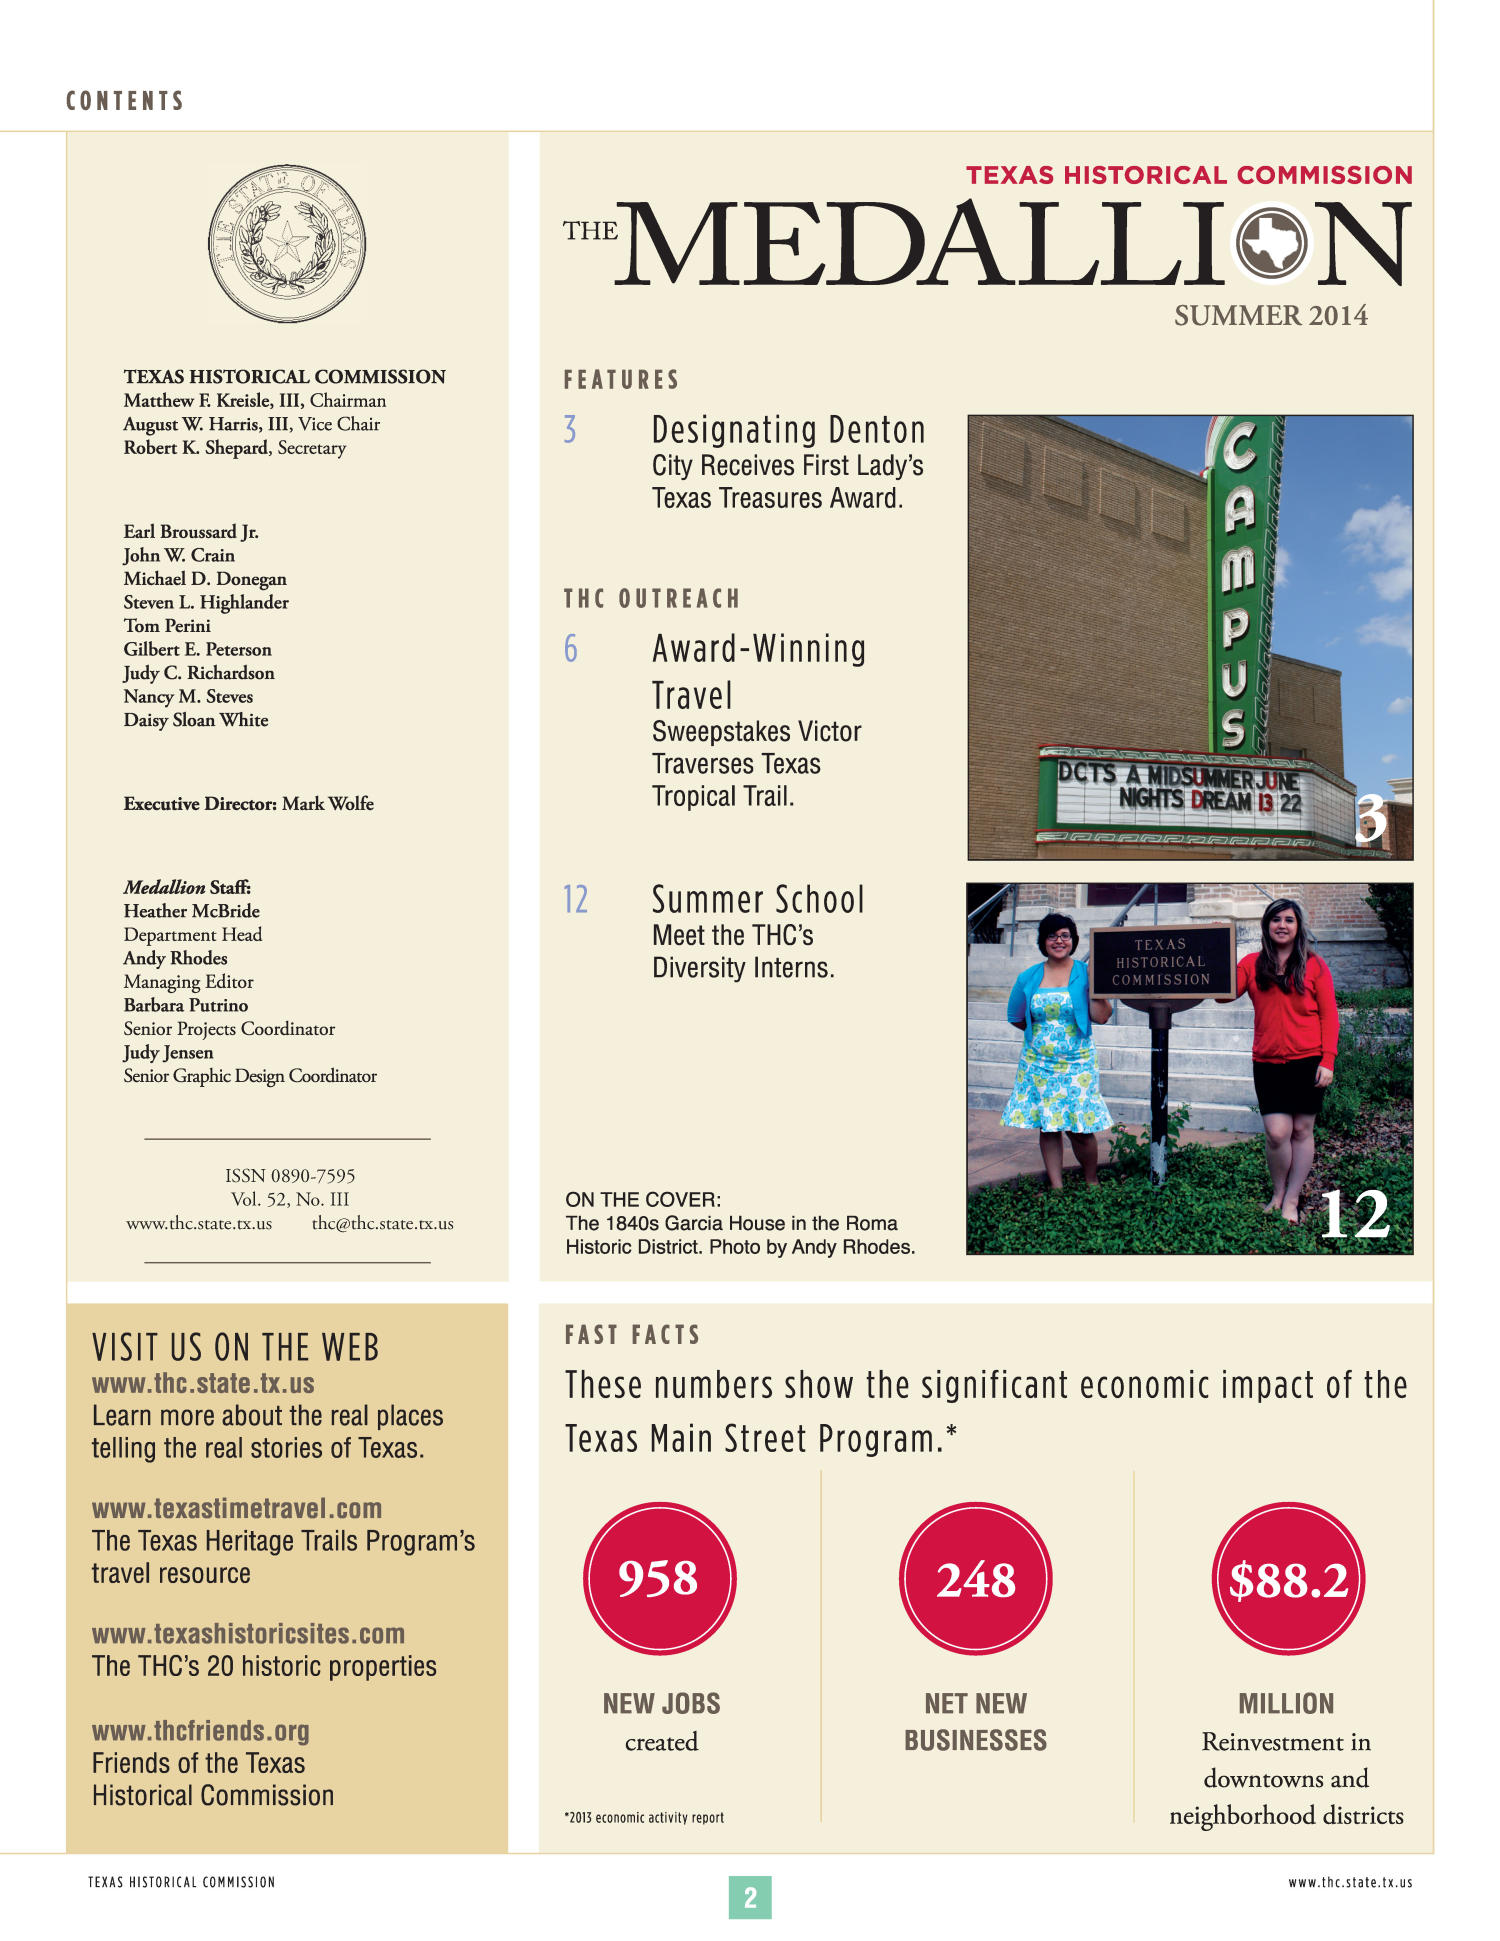 The Medallion, Volume 52, Number 3, Summer 2014
                                                
                                                    2
                                                